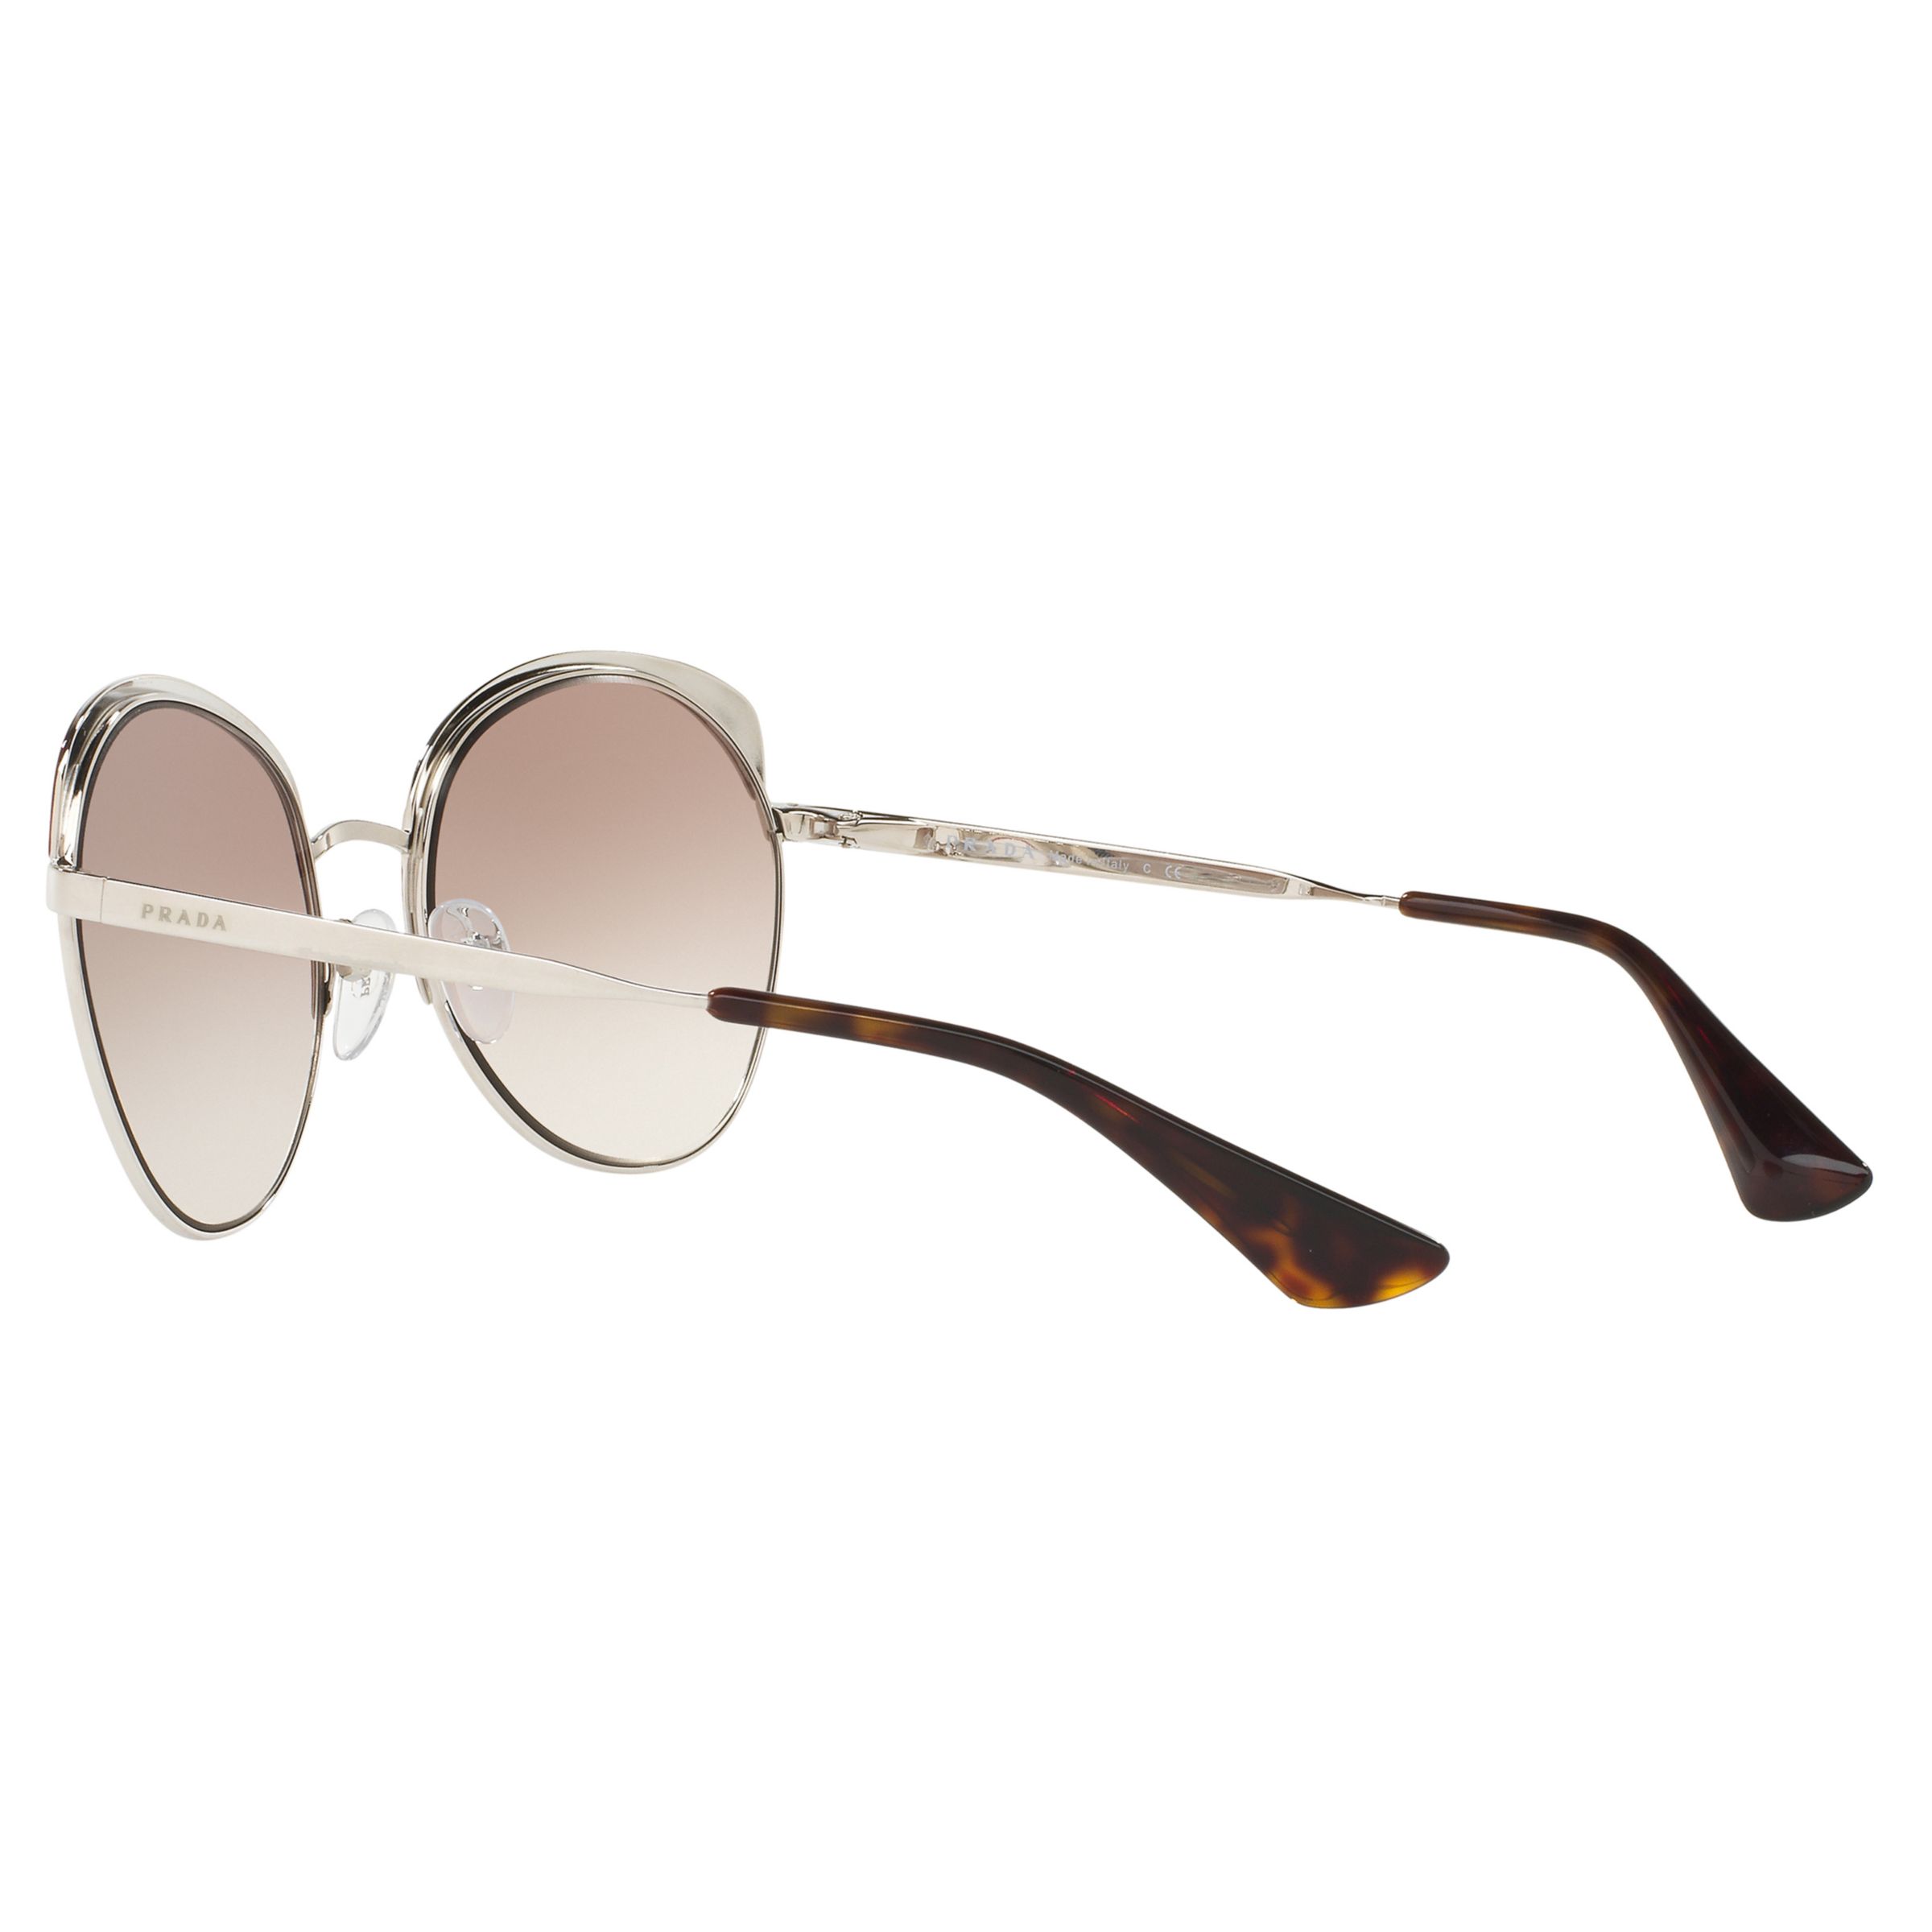 Prada PR 54SS Round Half Frame Sunglasses, Silver at John Lewis & Partners